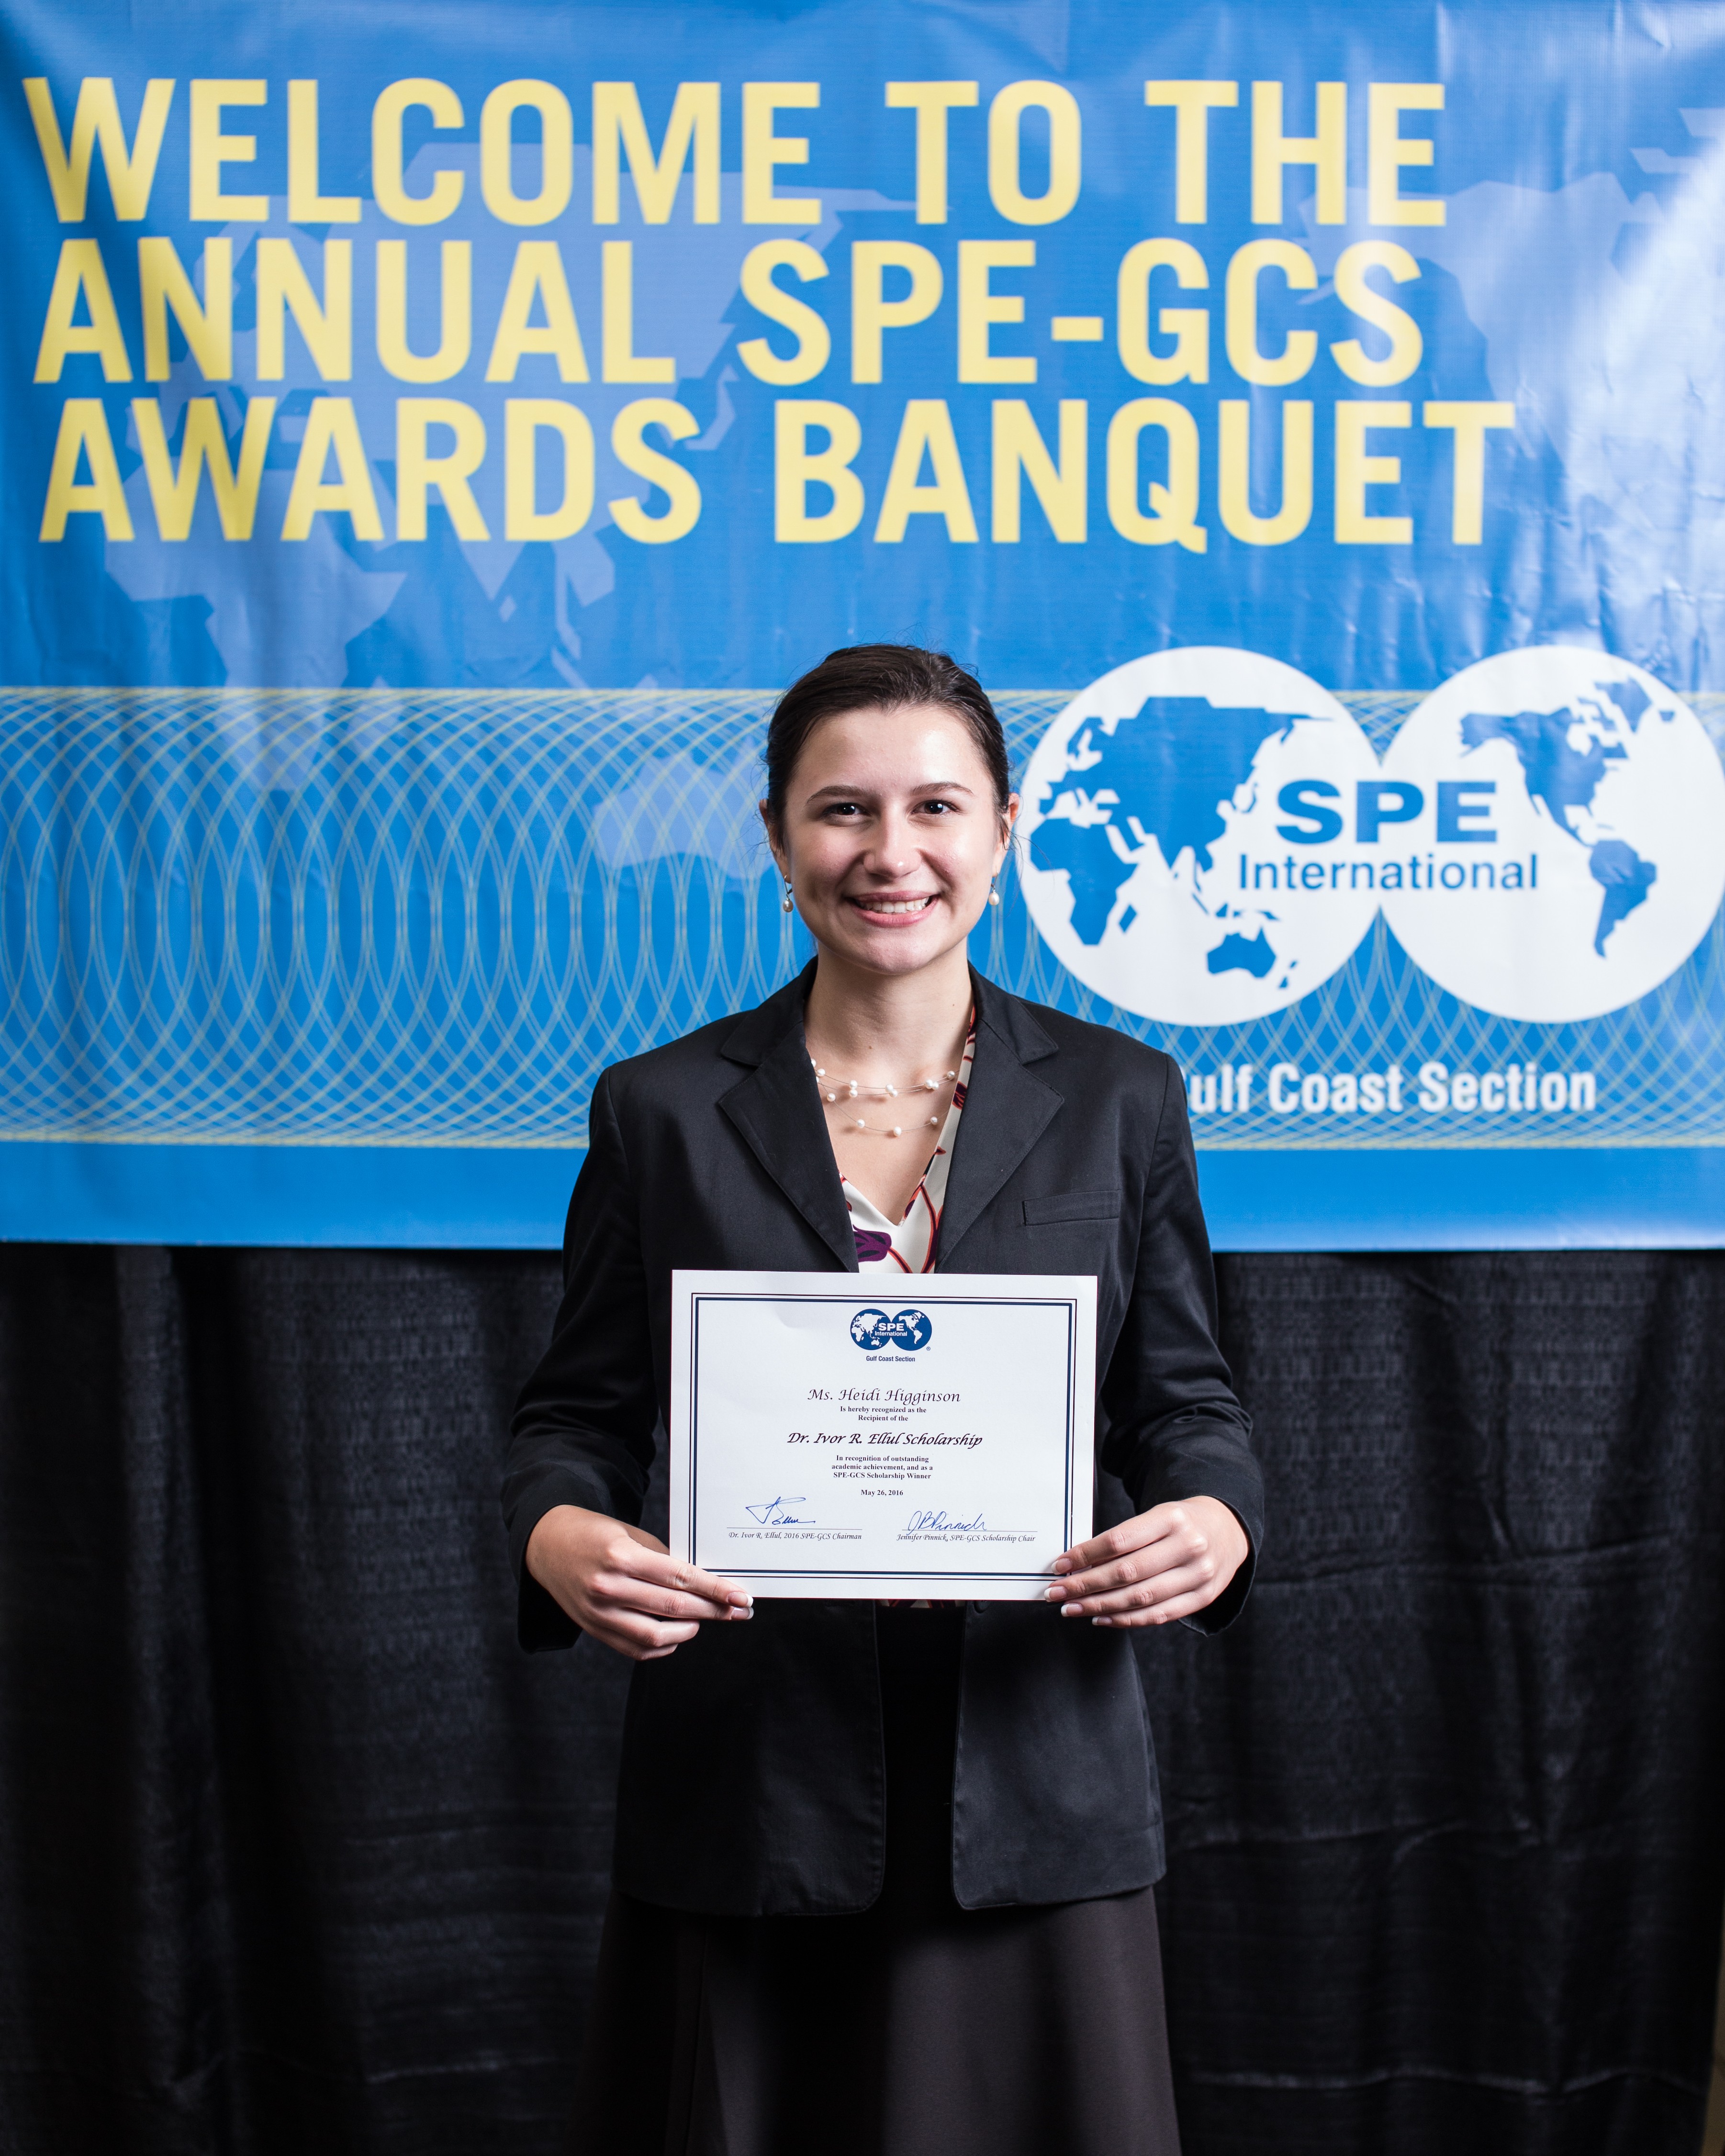 SPE-GCS Annual Awards Banquet